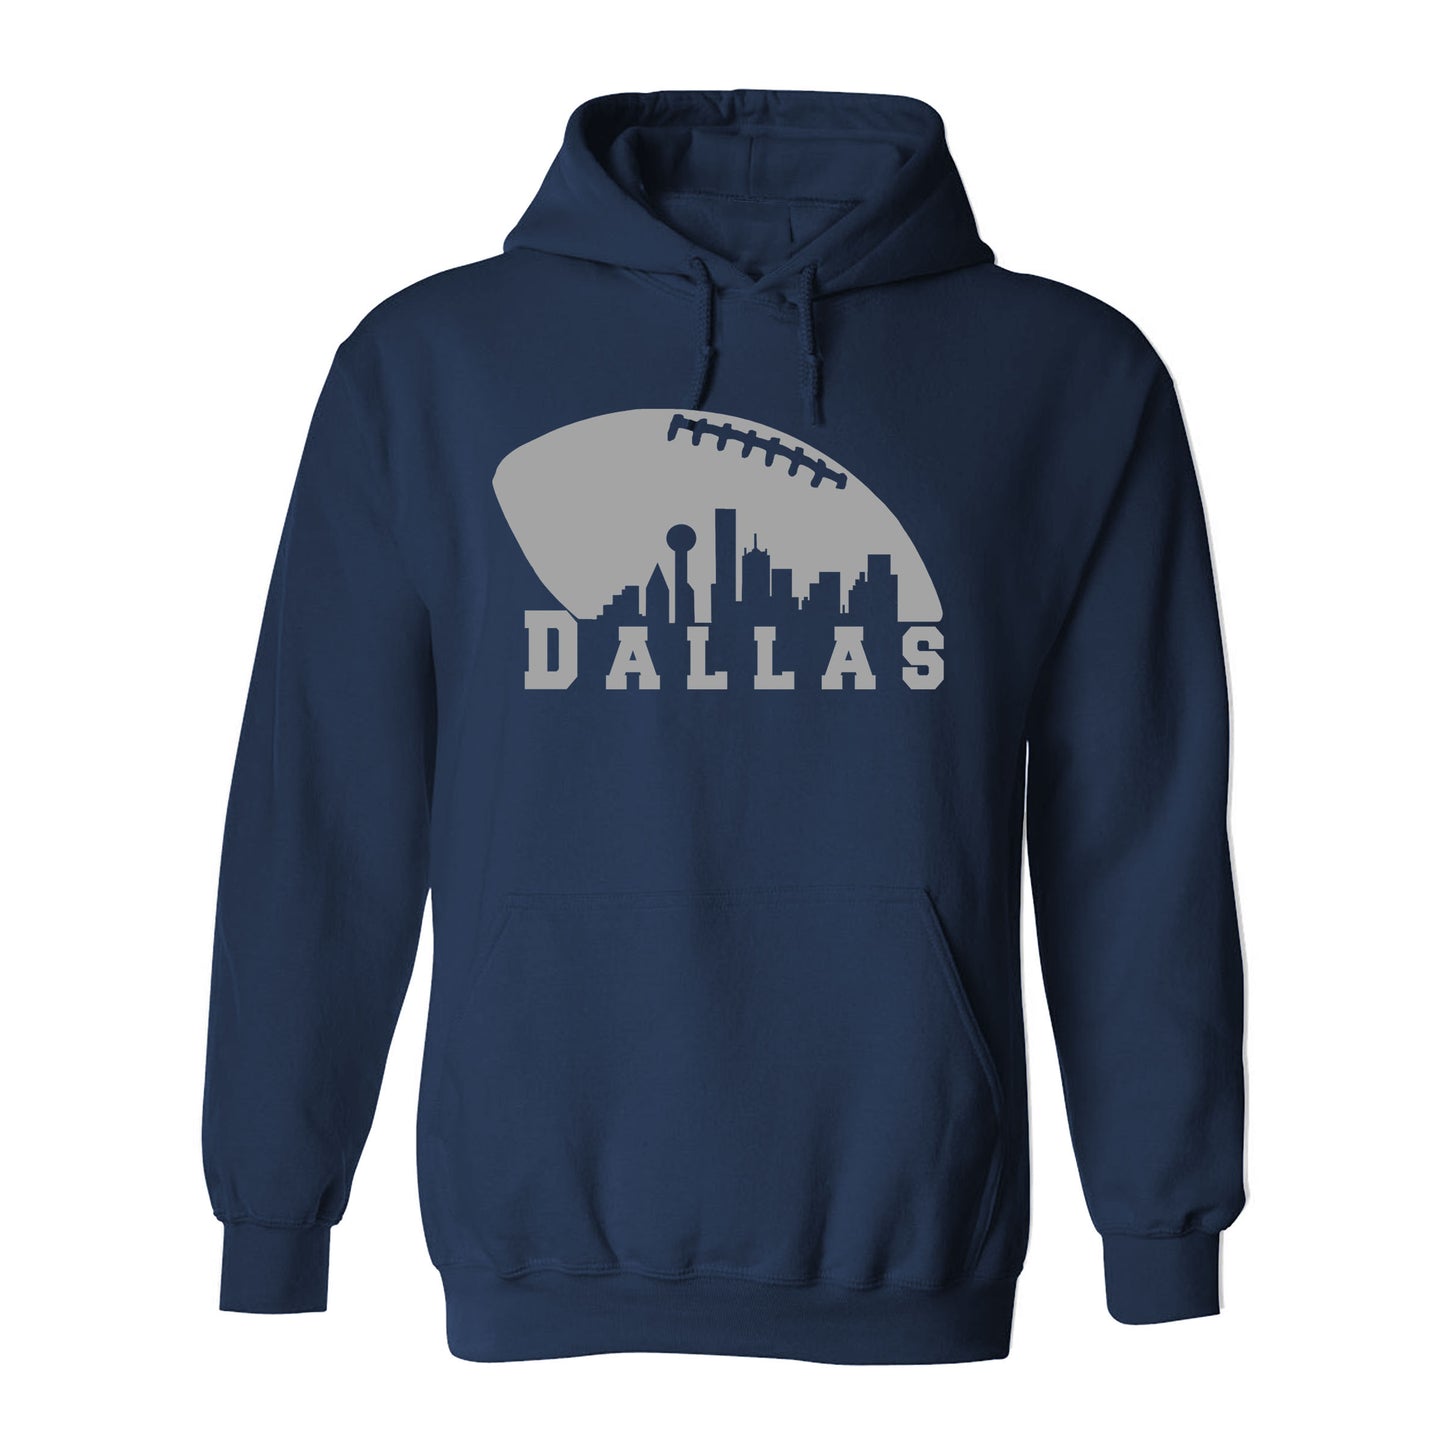 Dallas Football City Skyline Apparel for Football Fans (S-3XL)